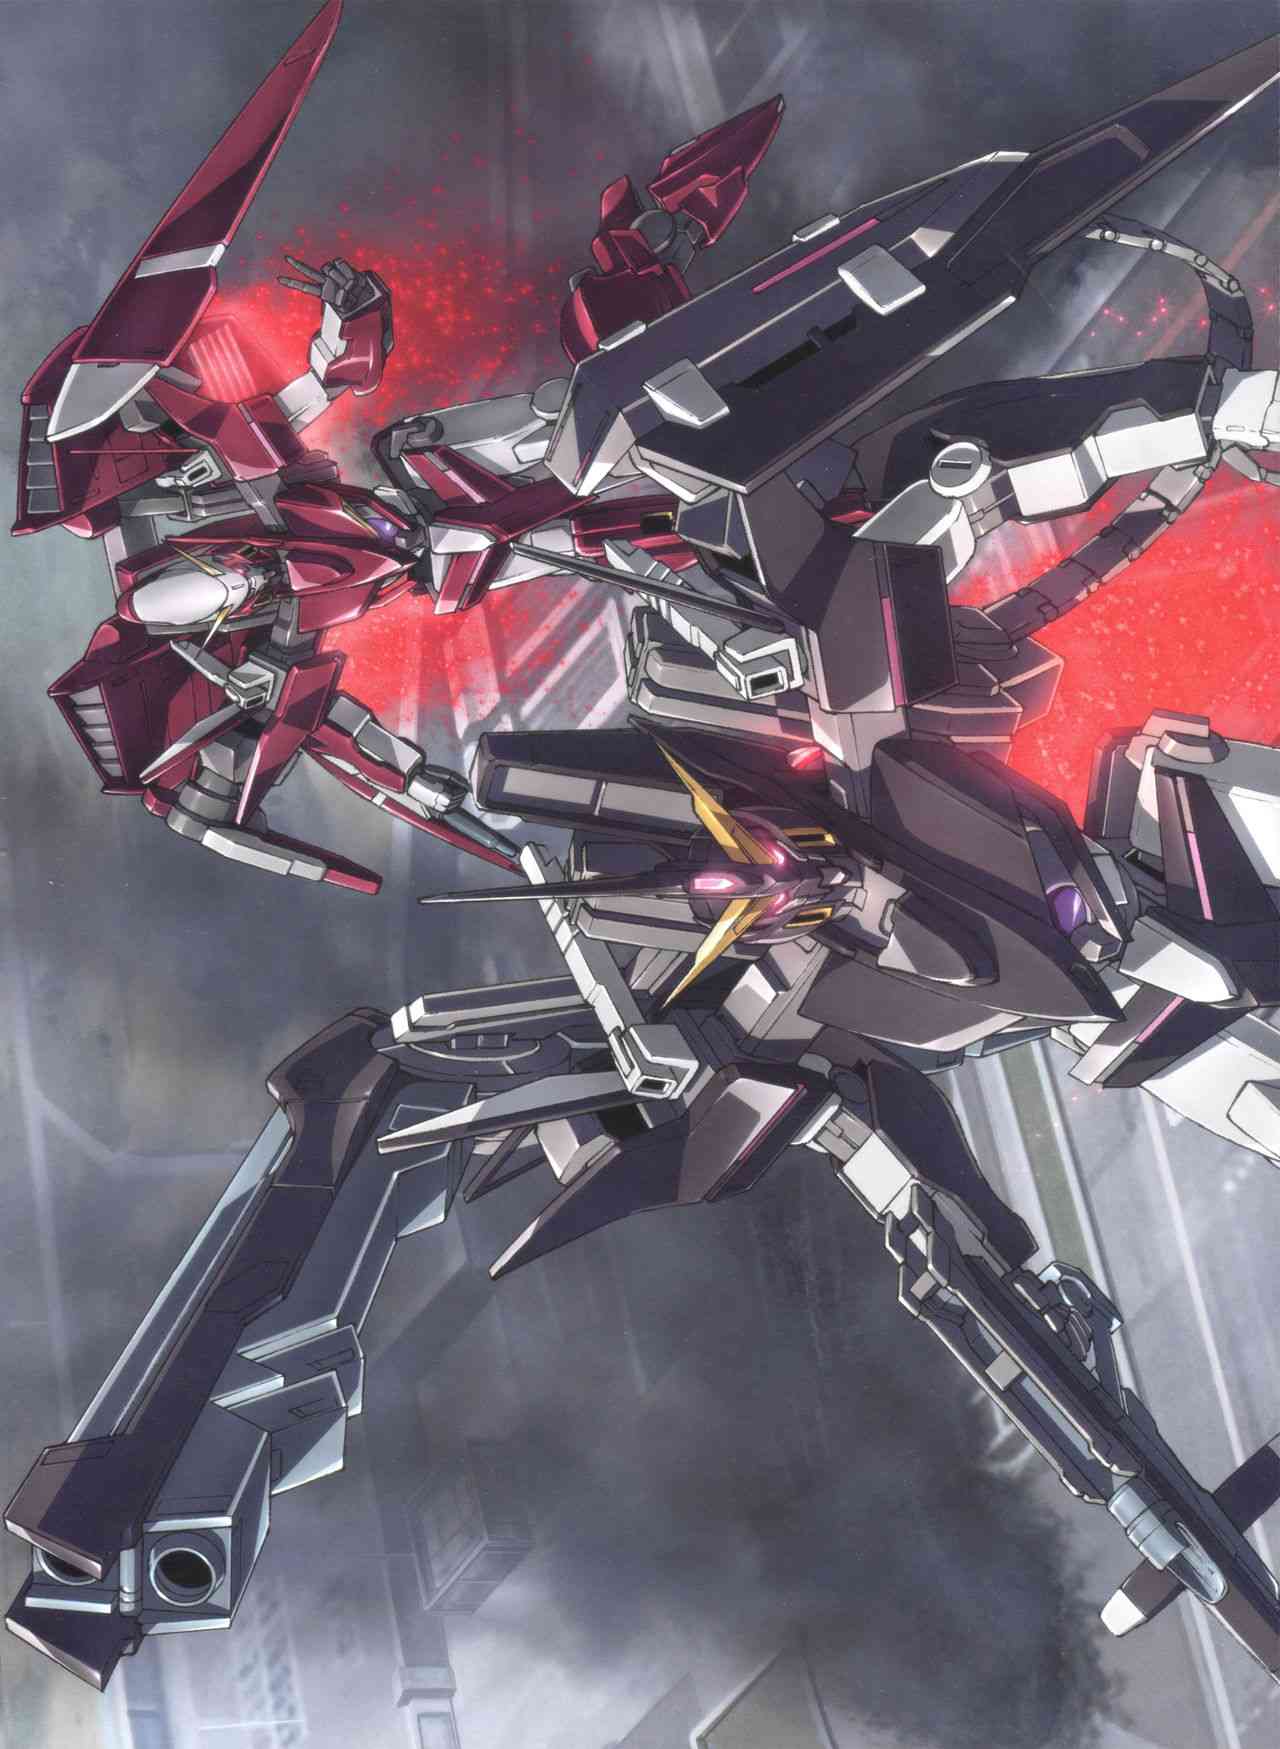 Gundam Mobile Suit Bible - 75卷 - 4